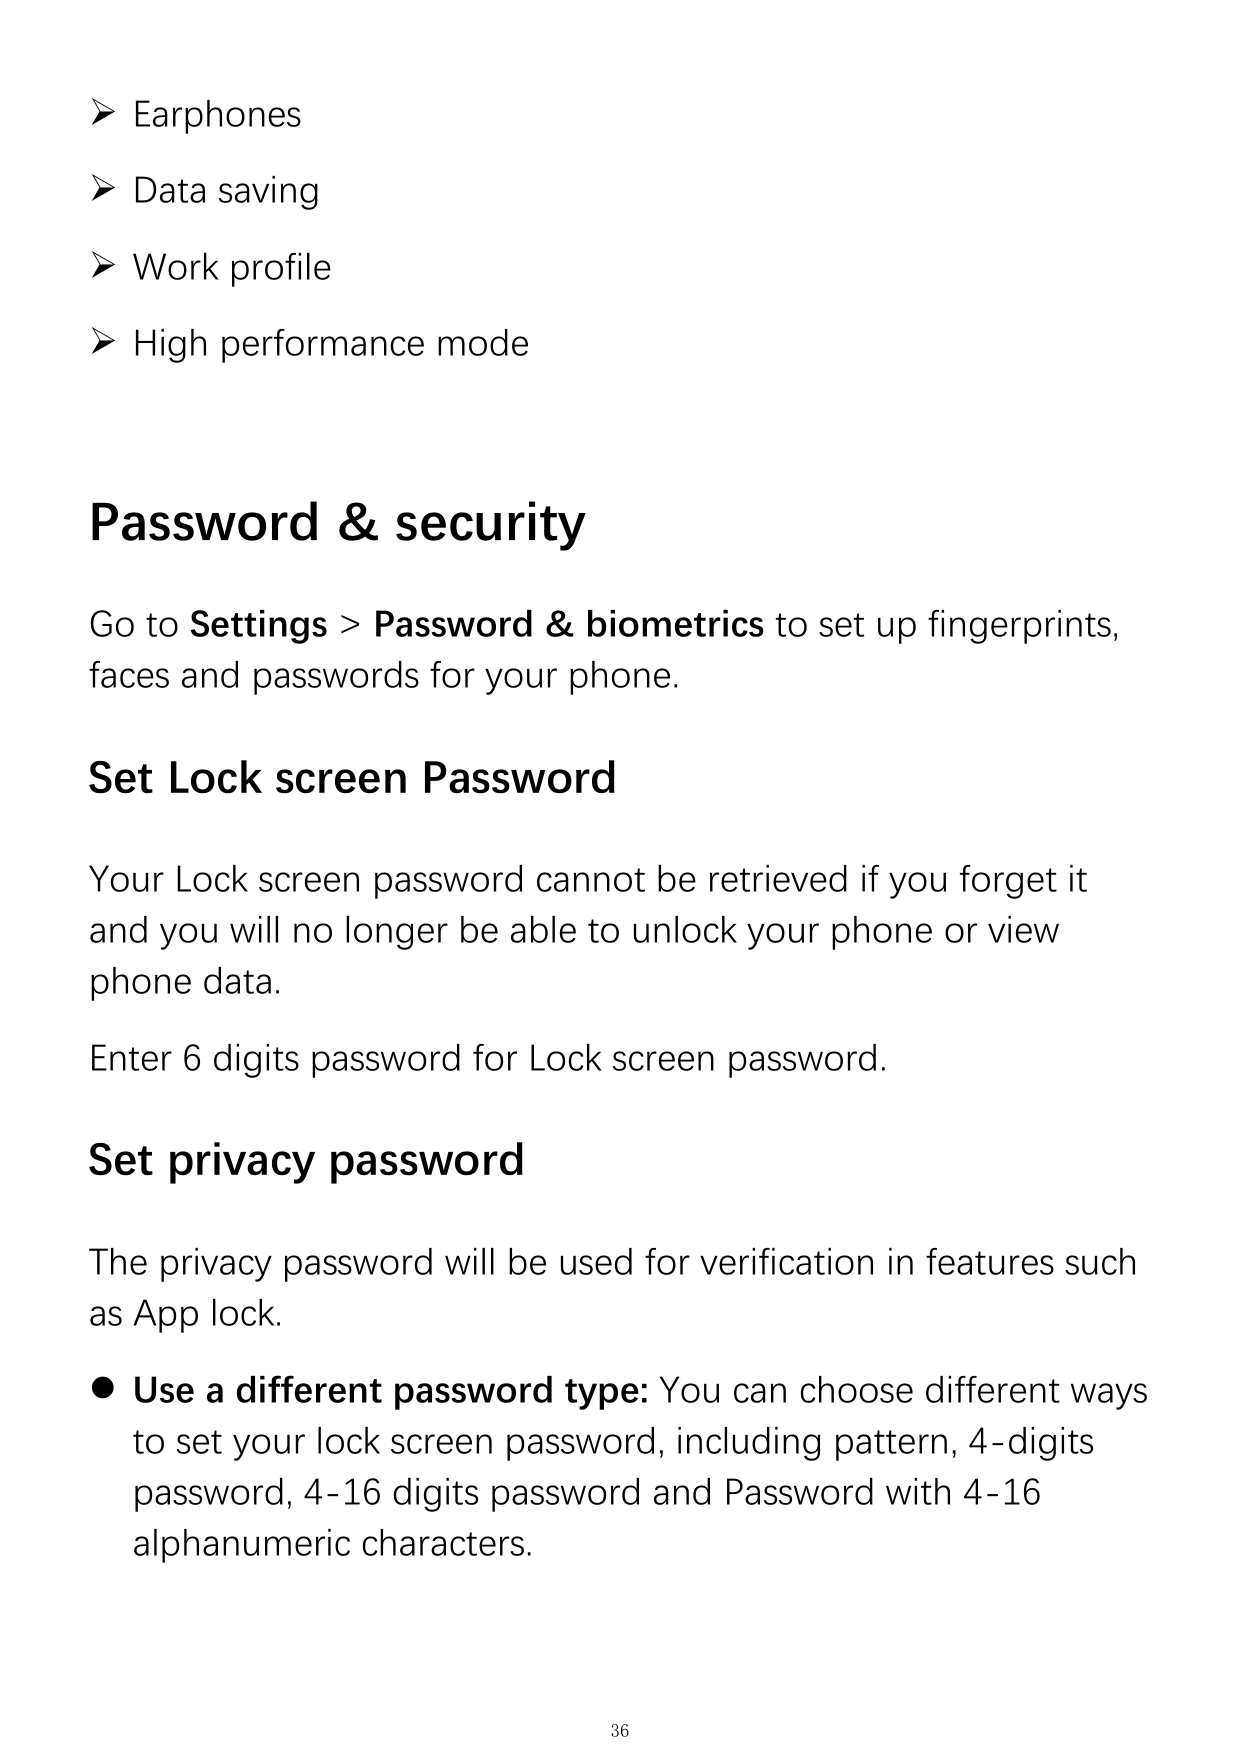 ➢ Earphones➢ Data saving➢ Work profile➢ High performance modePassword & securityGo to Settings > Password & biometrics to set up